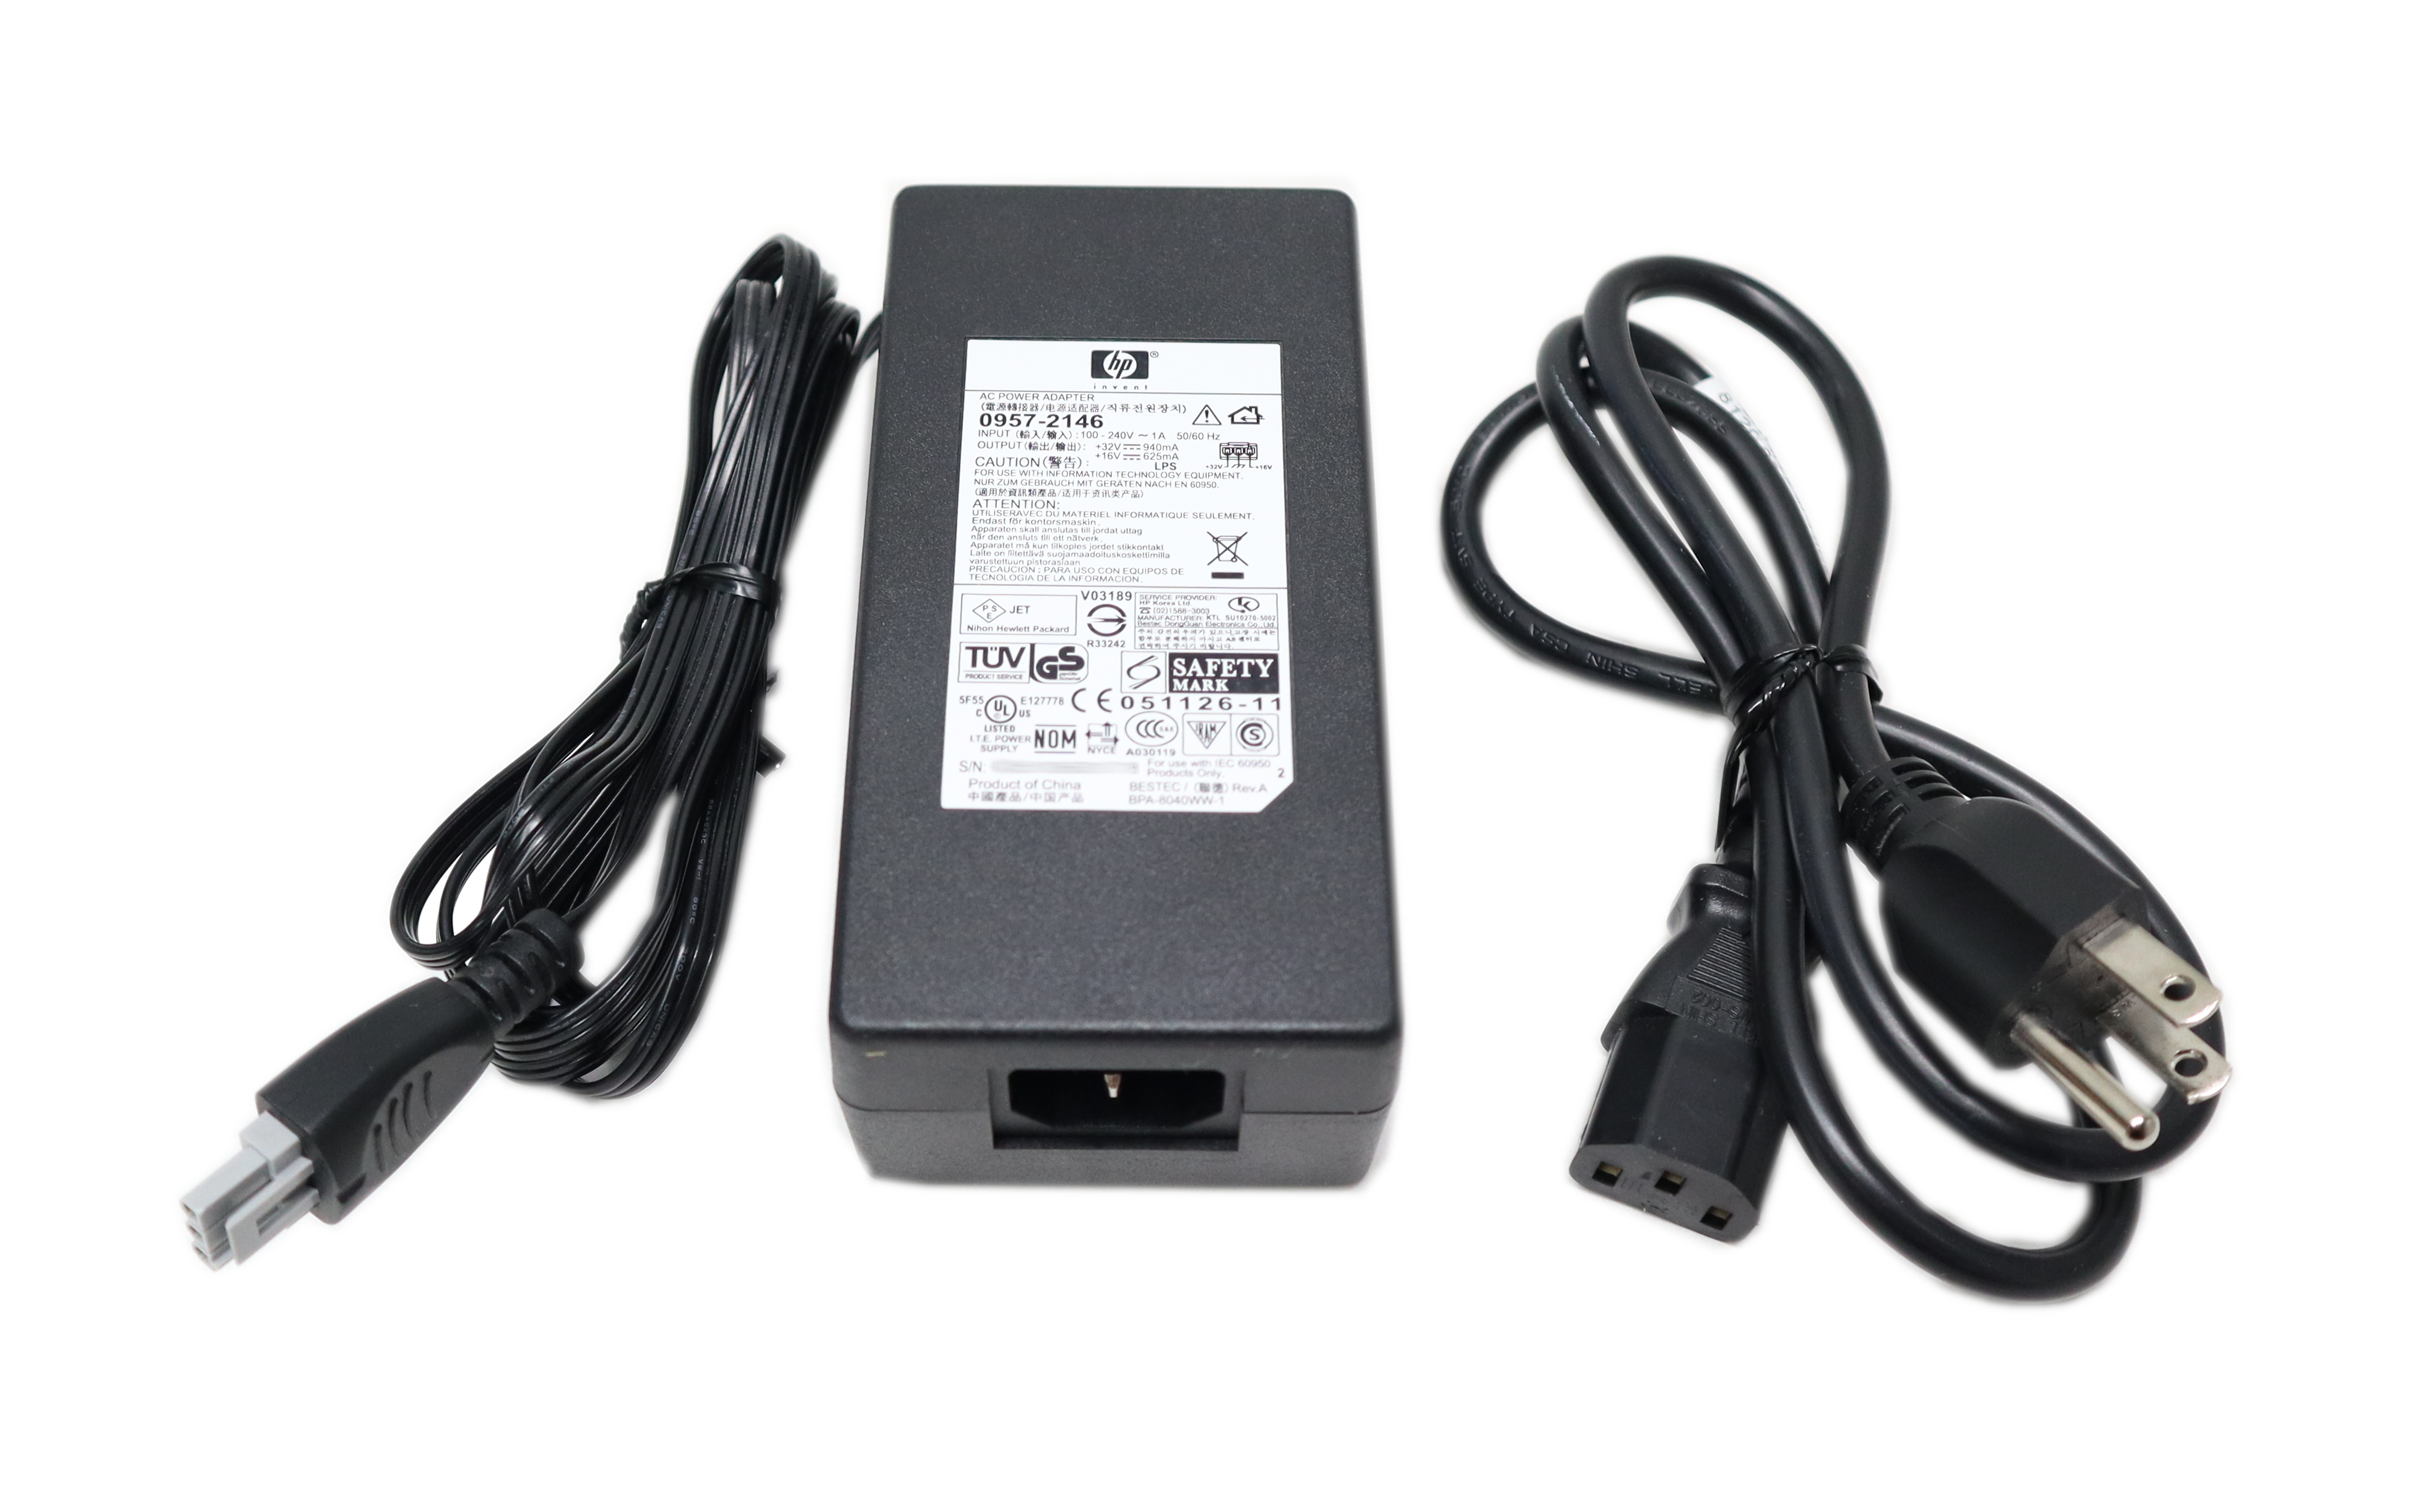 HP AC Power Adapter for HP Printers DeskJet OfficeJet PhotoSmart 0957-2146